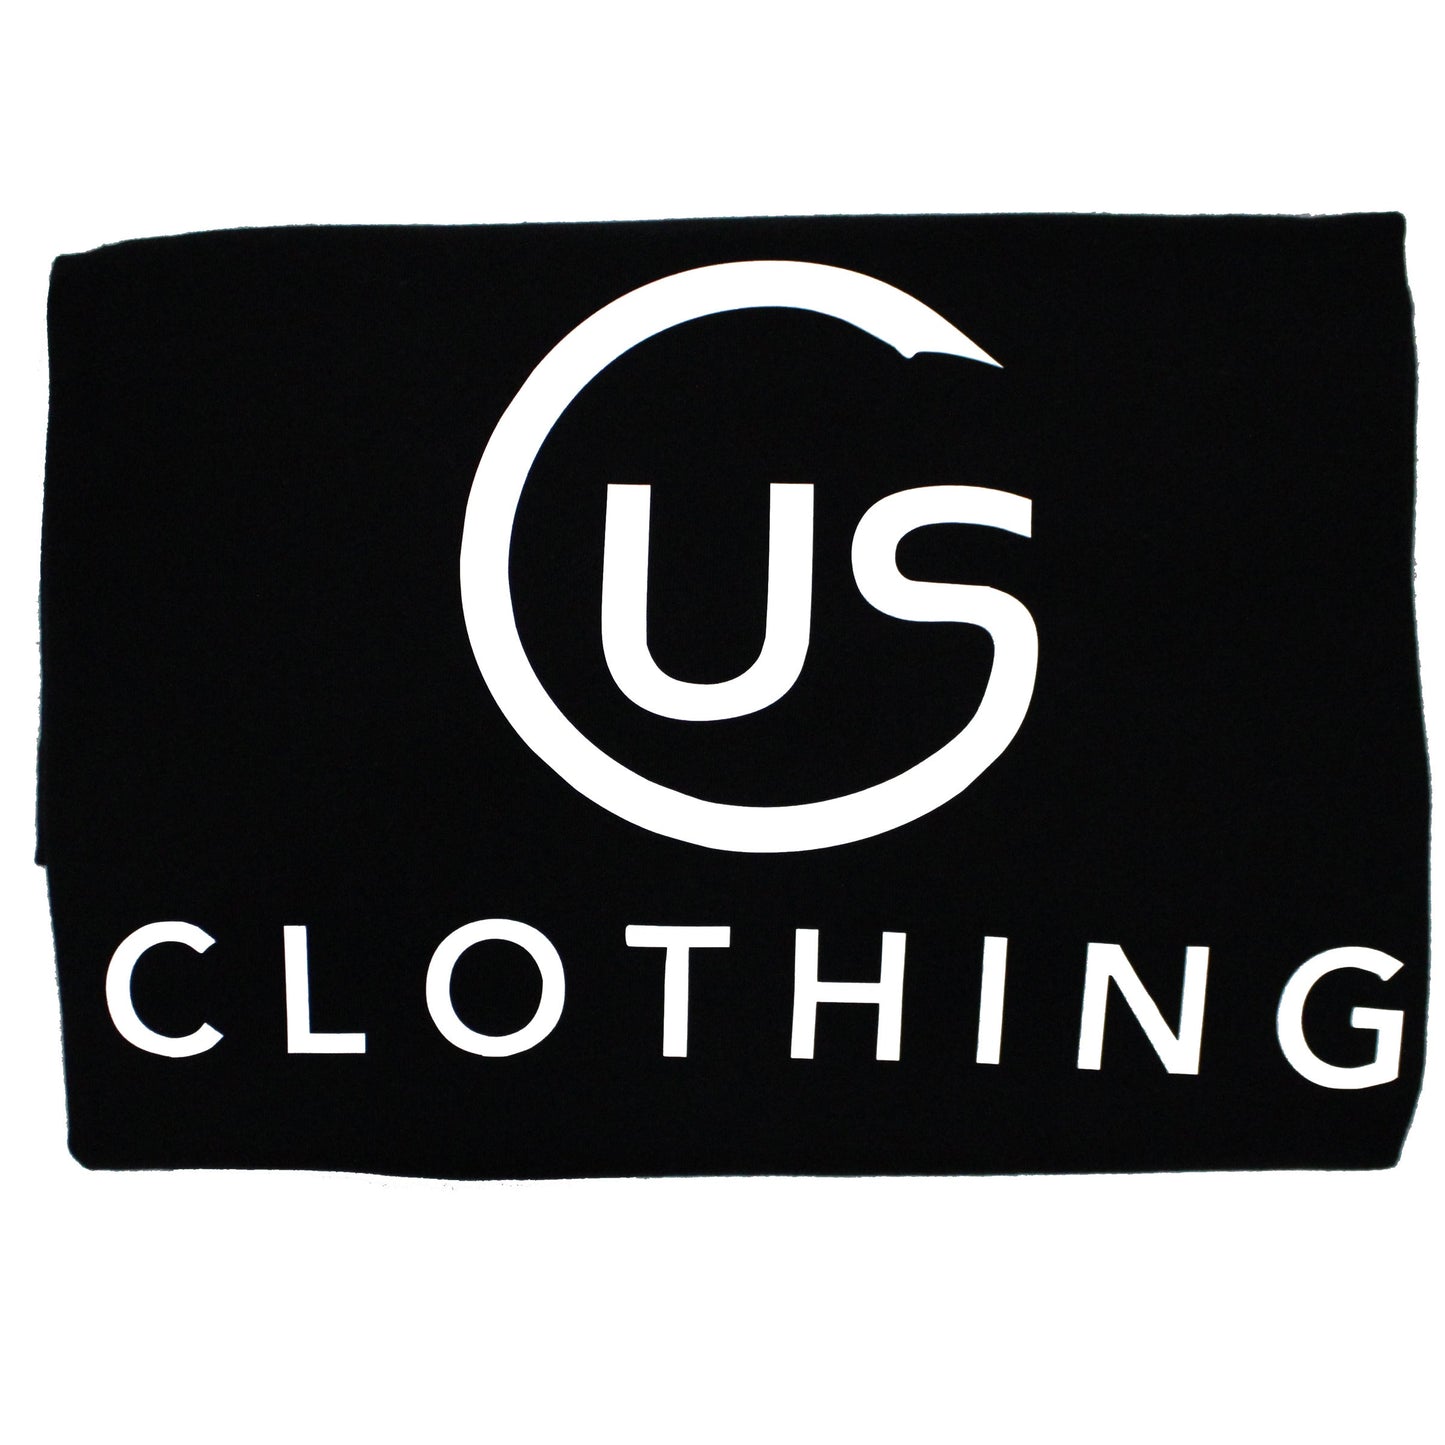 CLASSIC US CLOTHING TEE